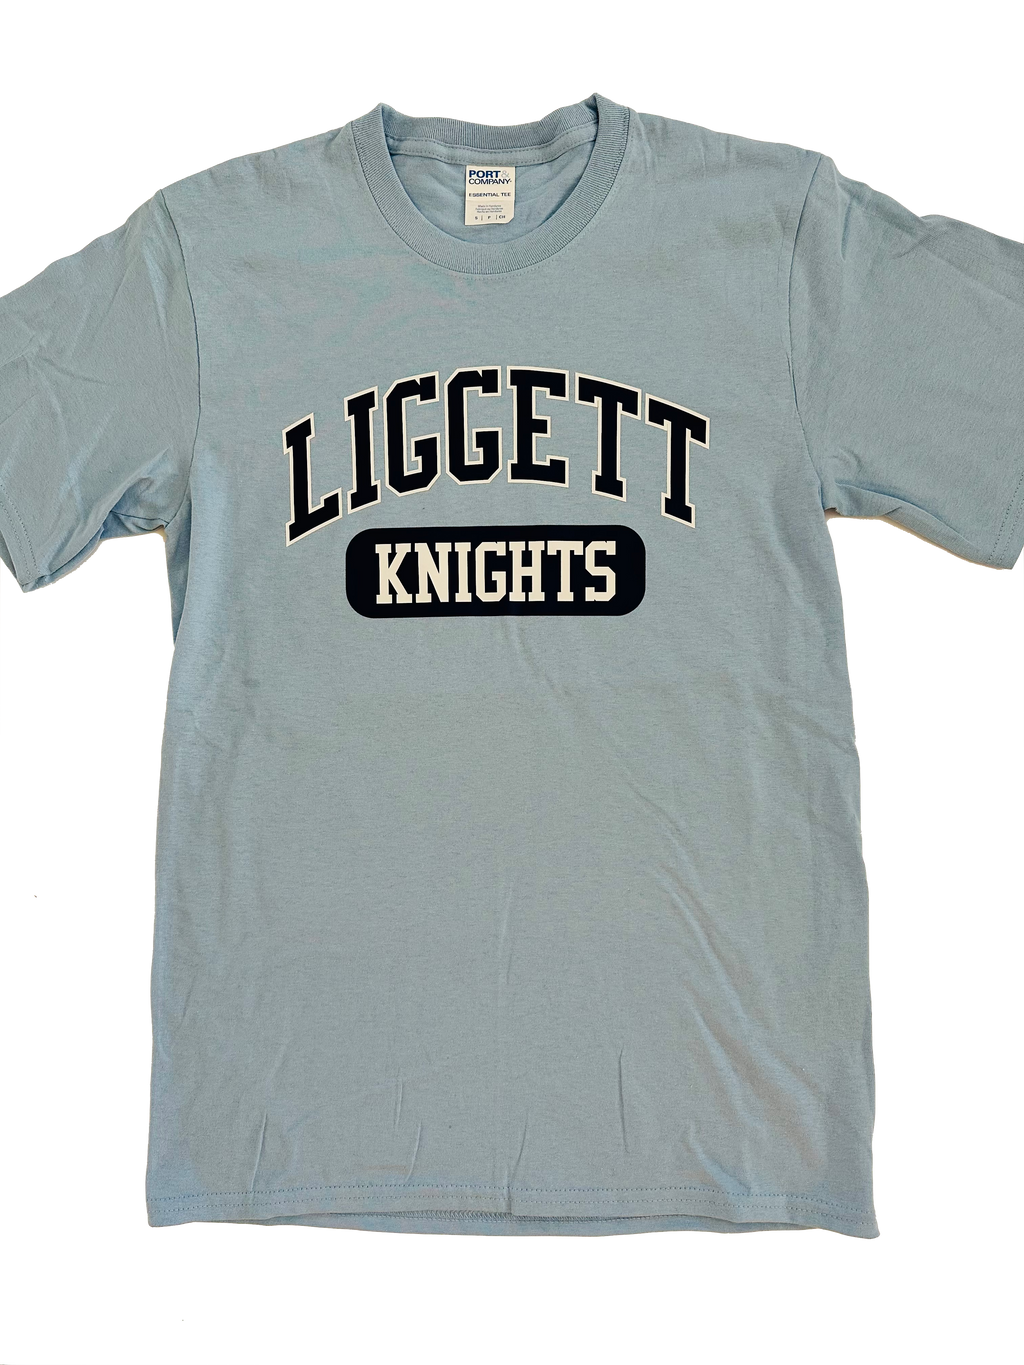 NEW Adult Light Blue Liggett Knights SS Tee